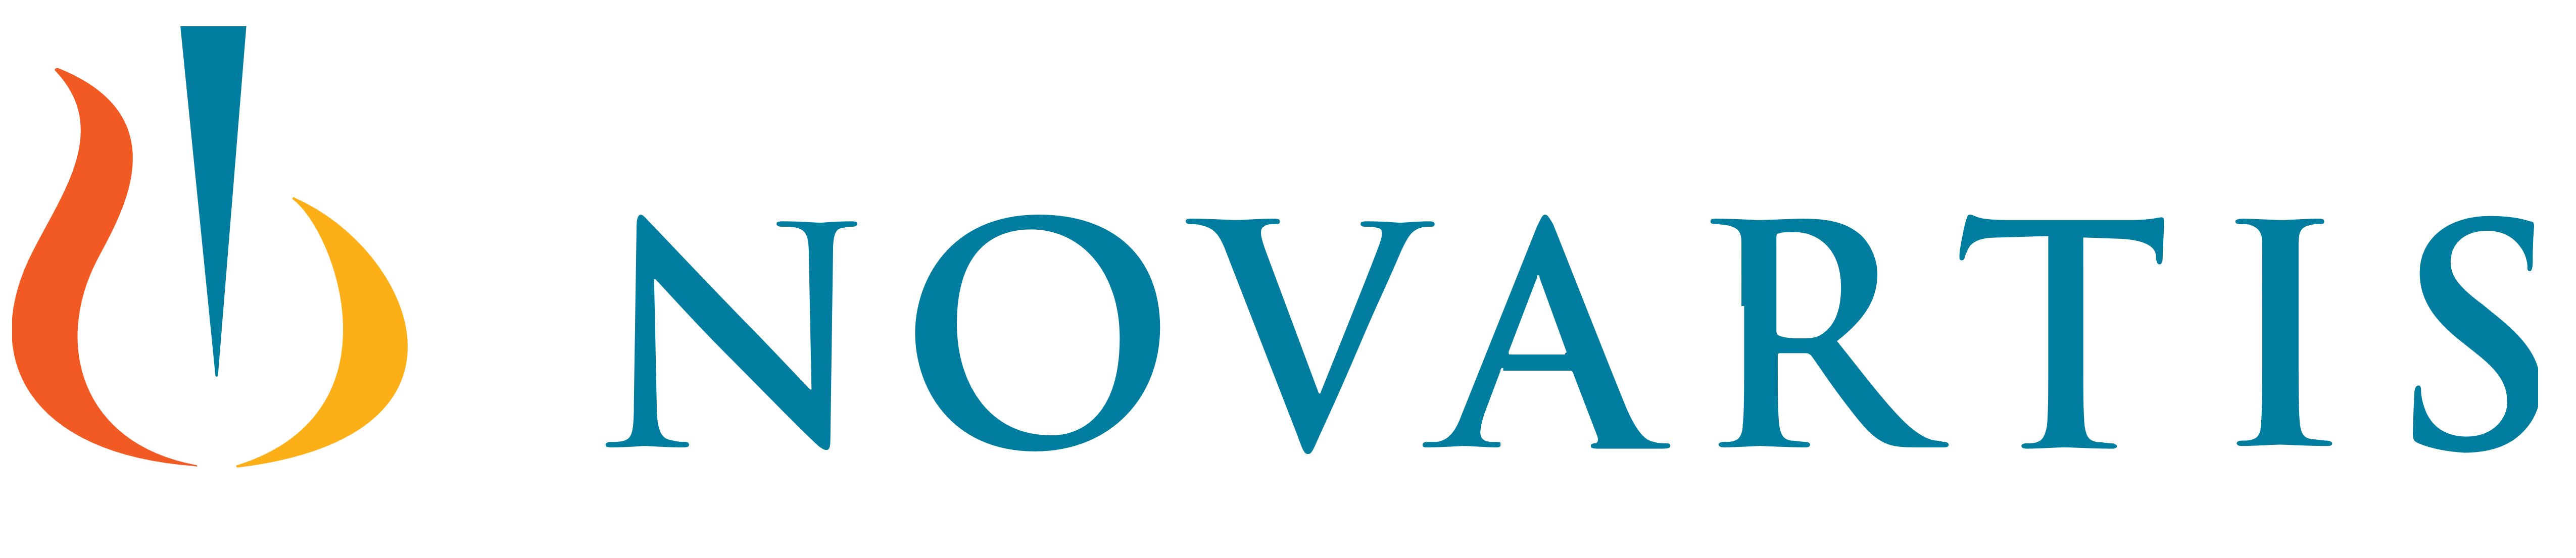 Novartis_logo_logotype